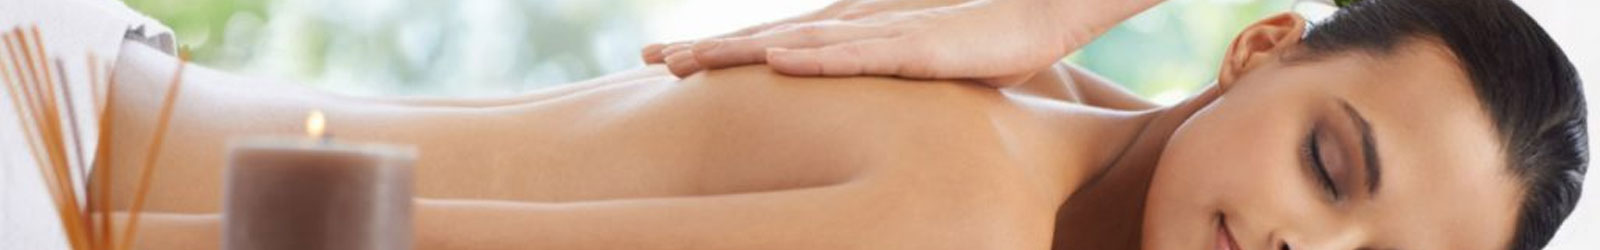 Reviews | The Massage Station, Professional Massage Therapy, Greensboro NC